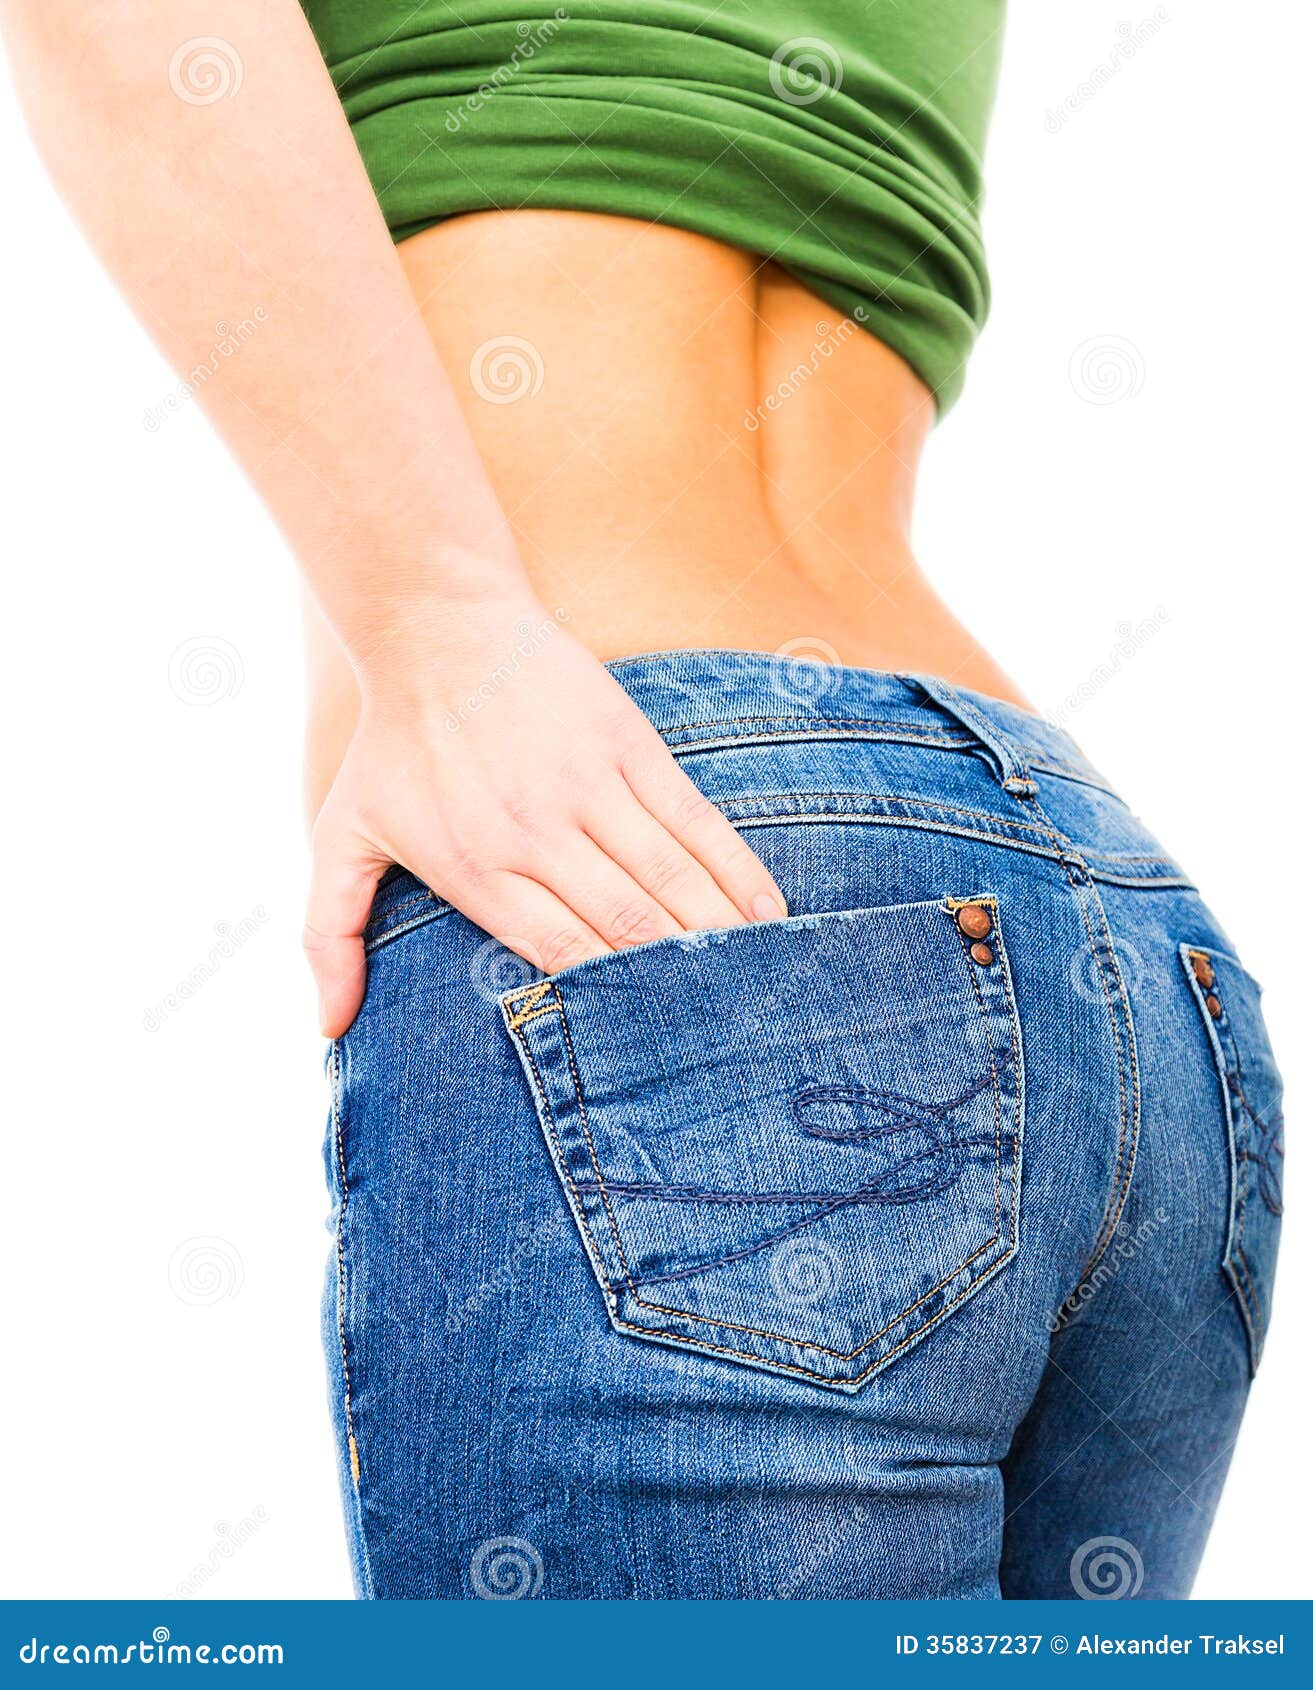 playful ass tight jeans